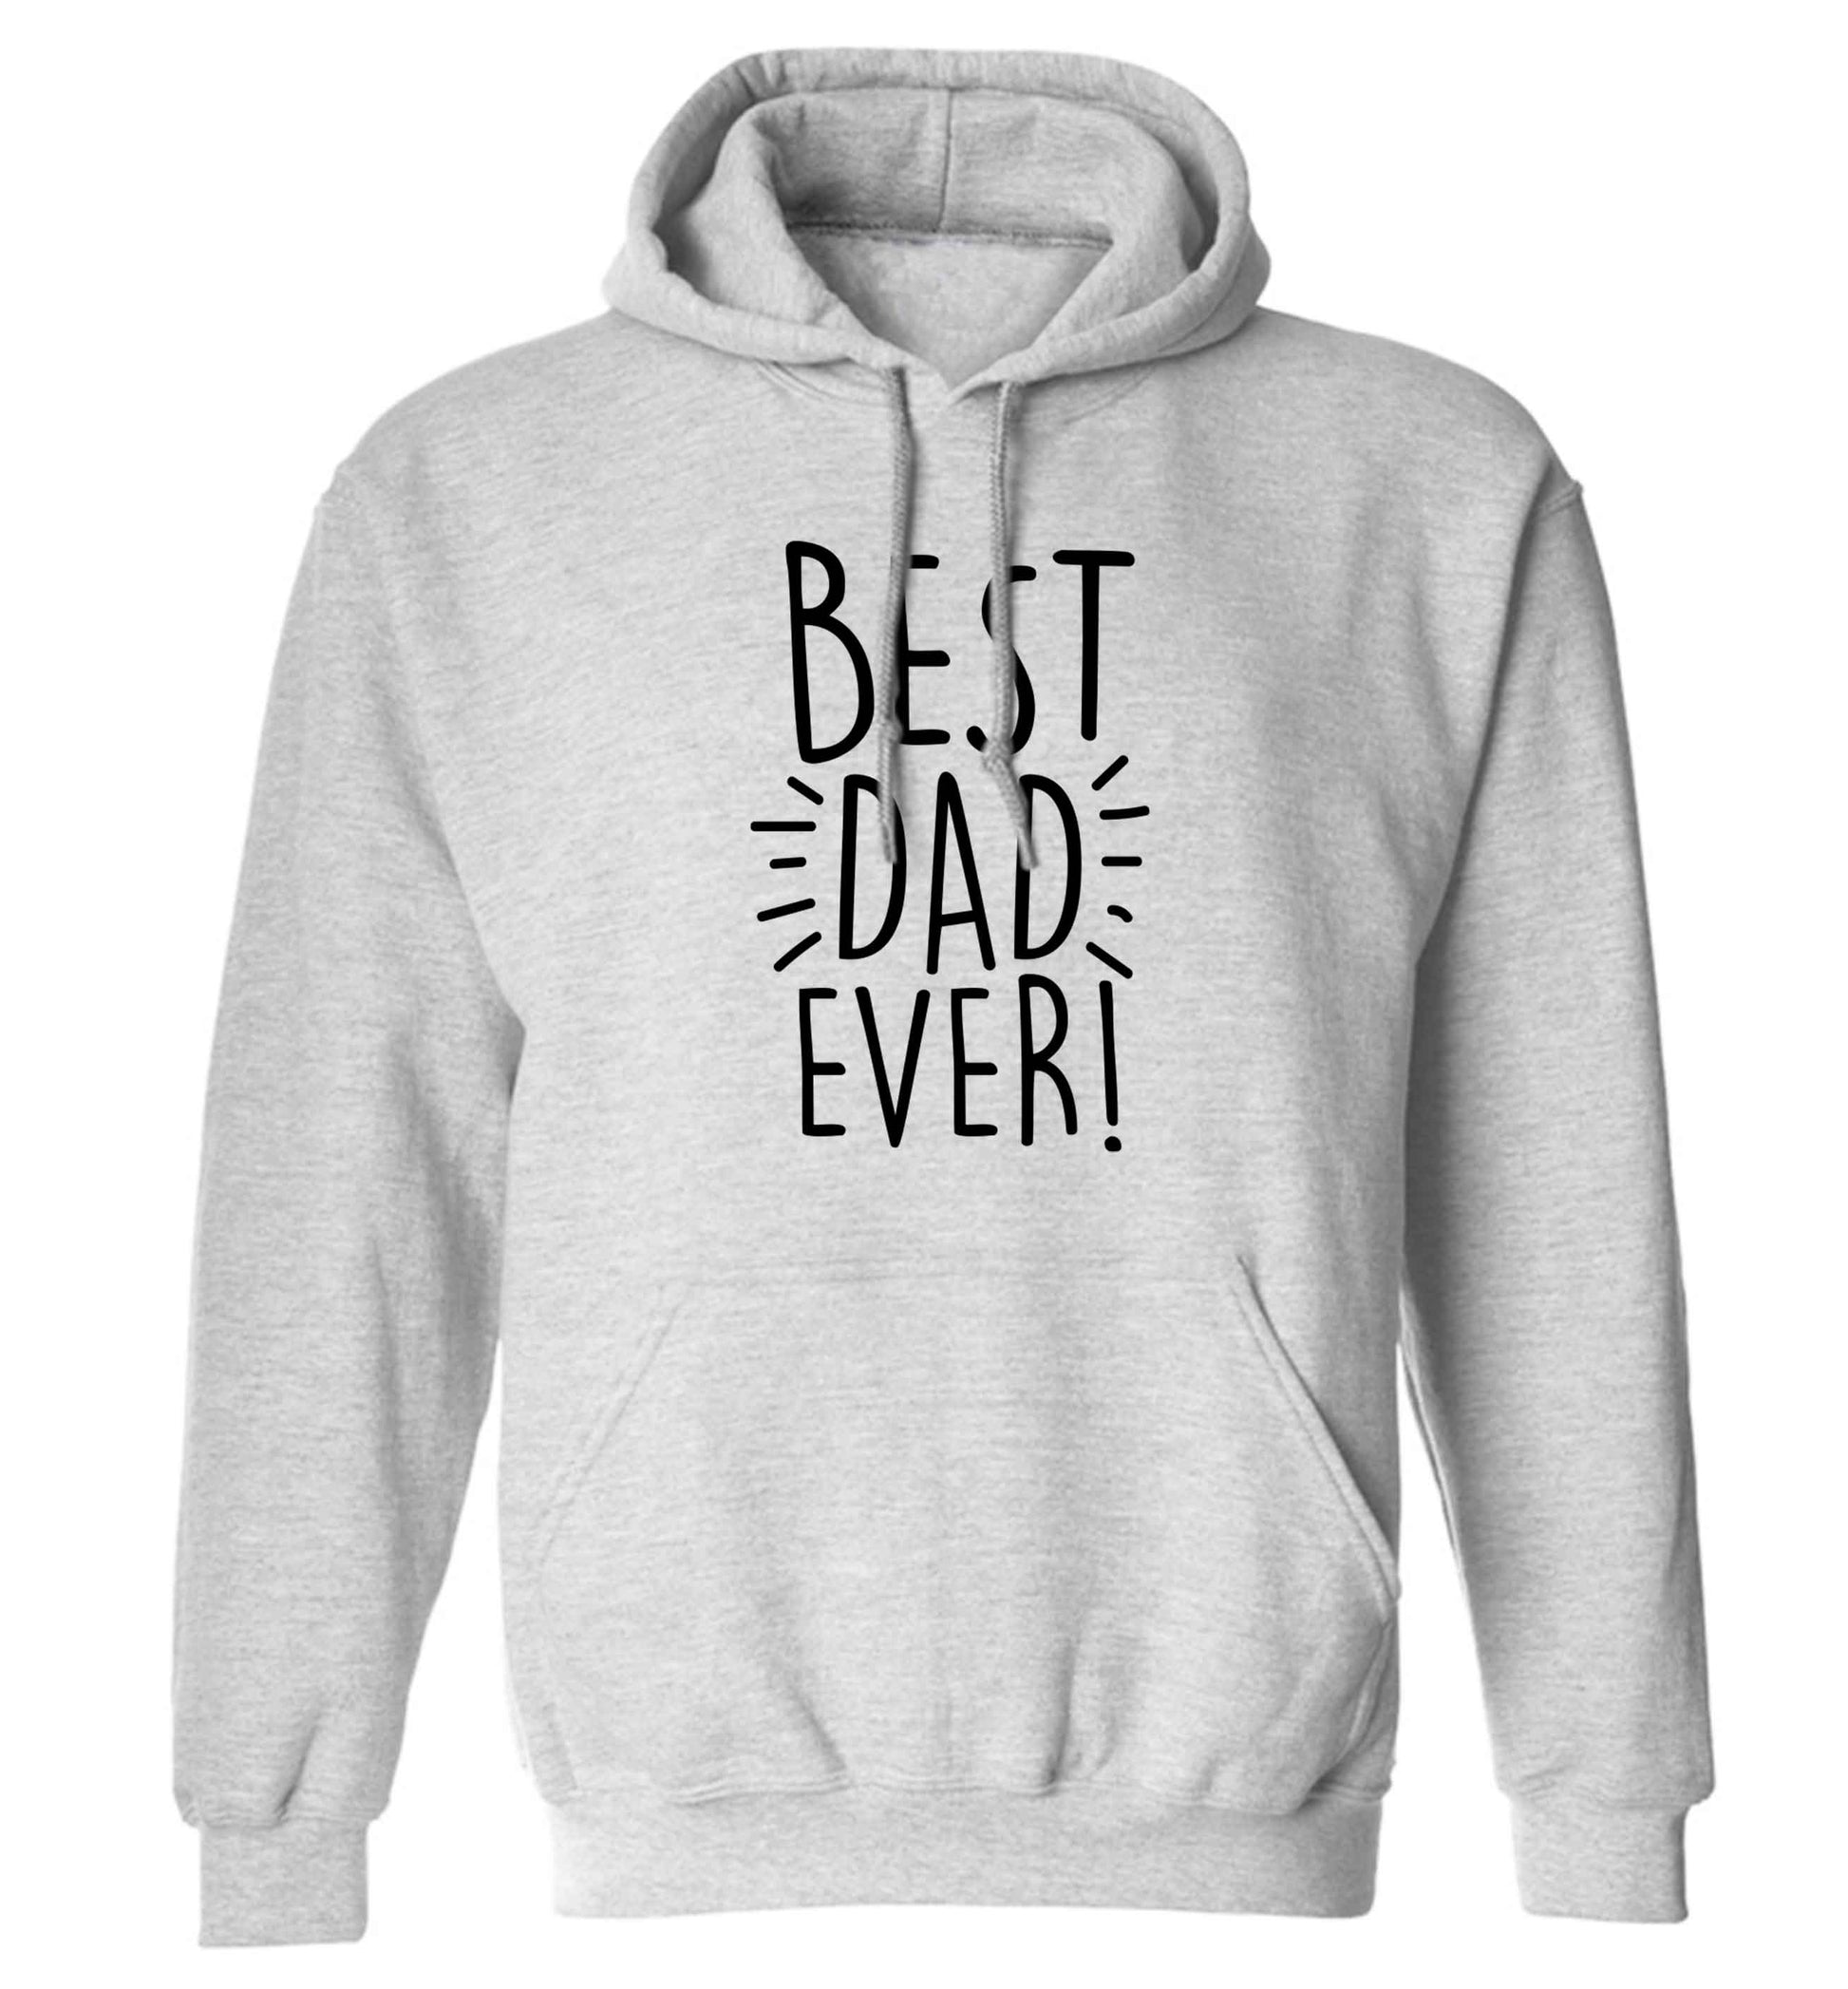 Best dad ever! adults unisex grey hoodie 2XL